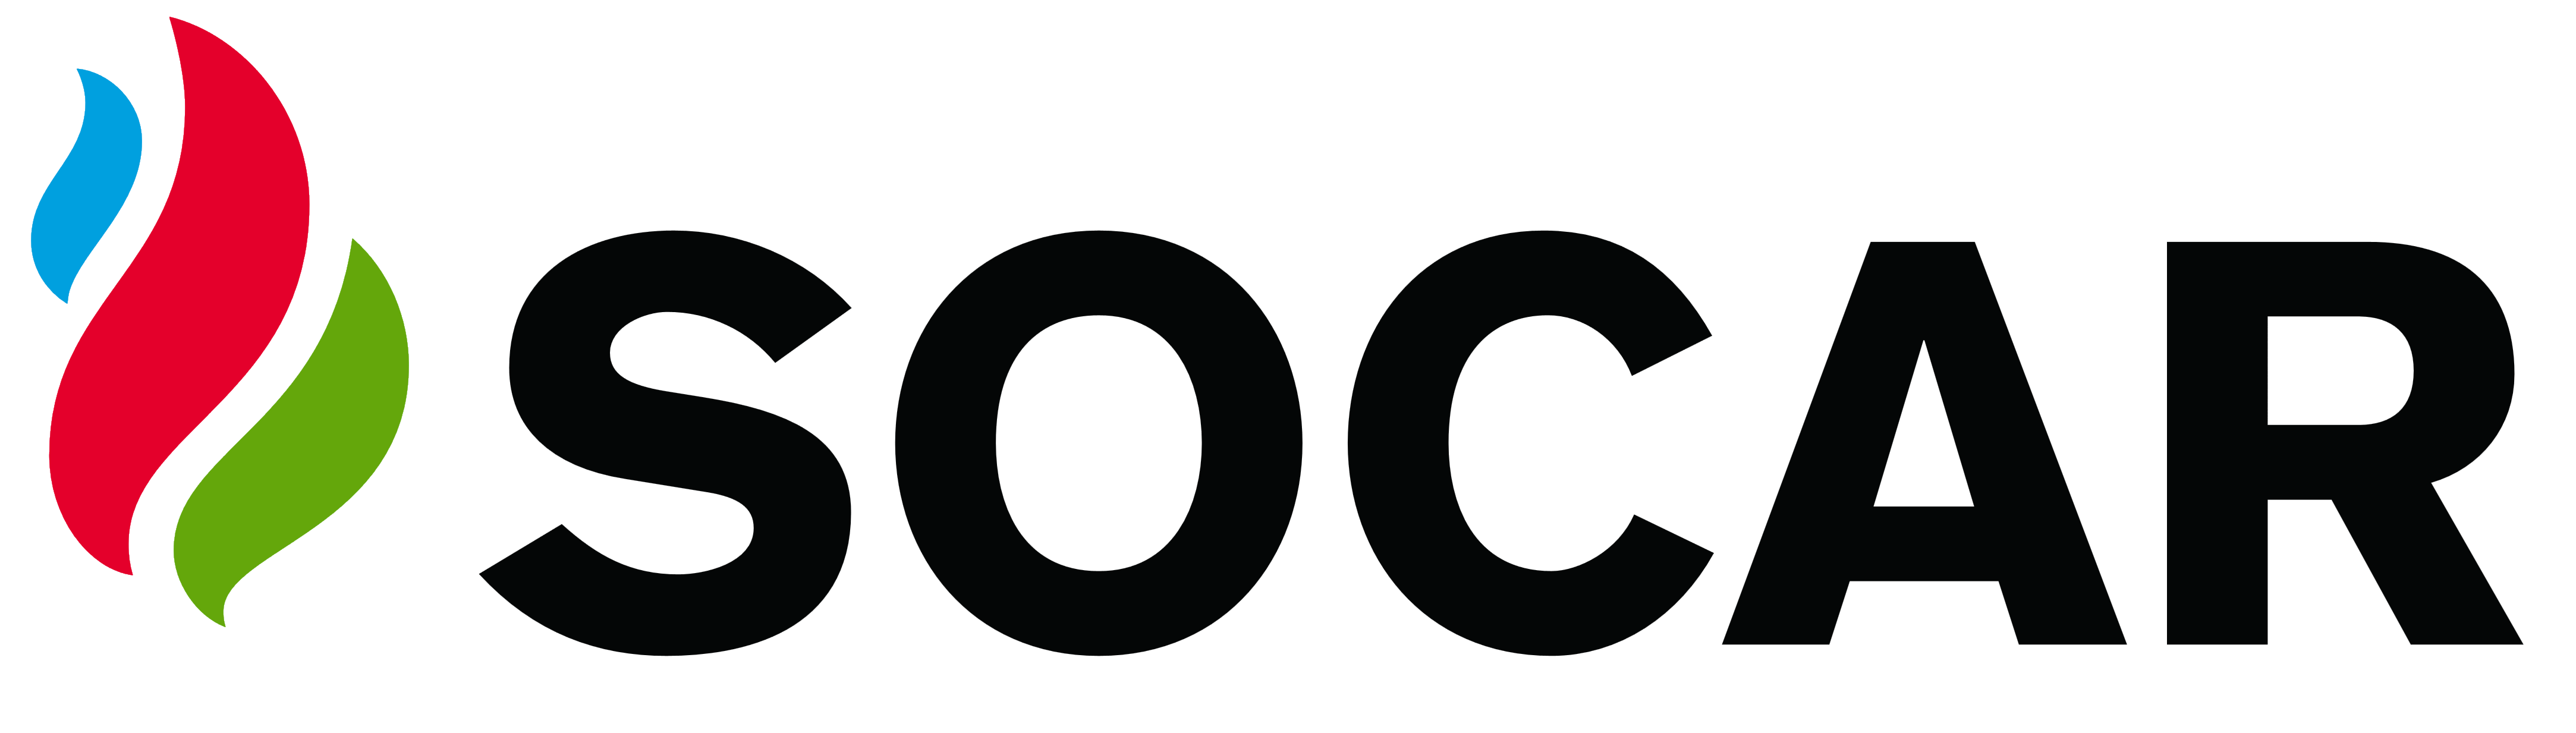 Socar logo, logotype